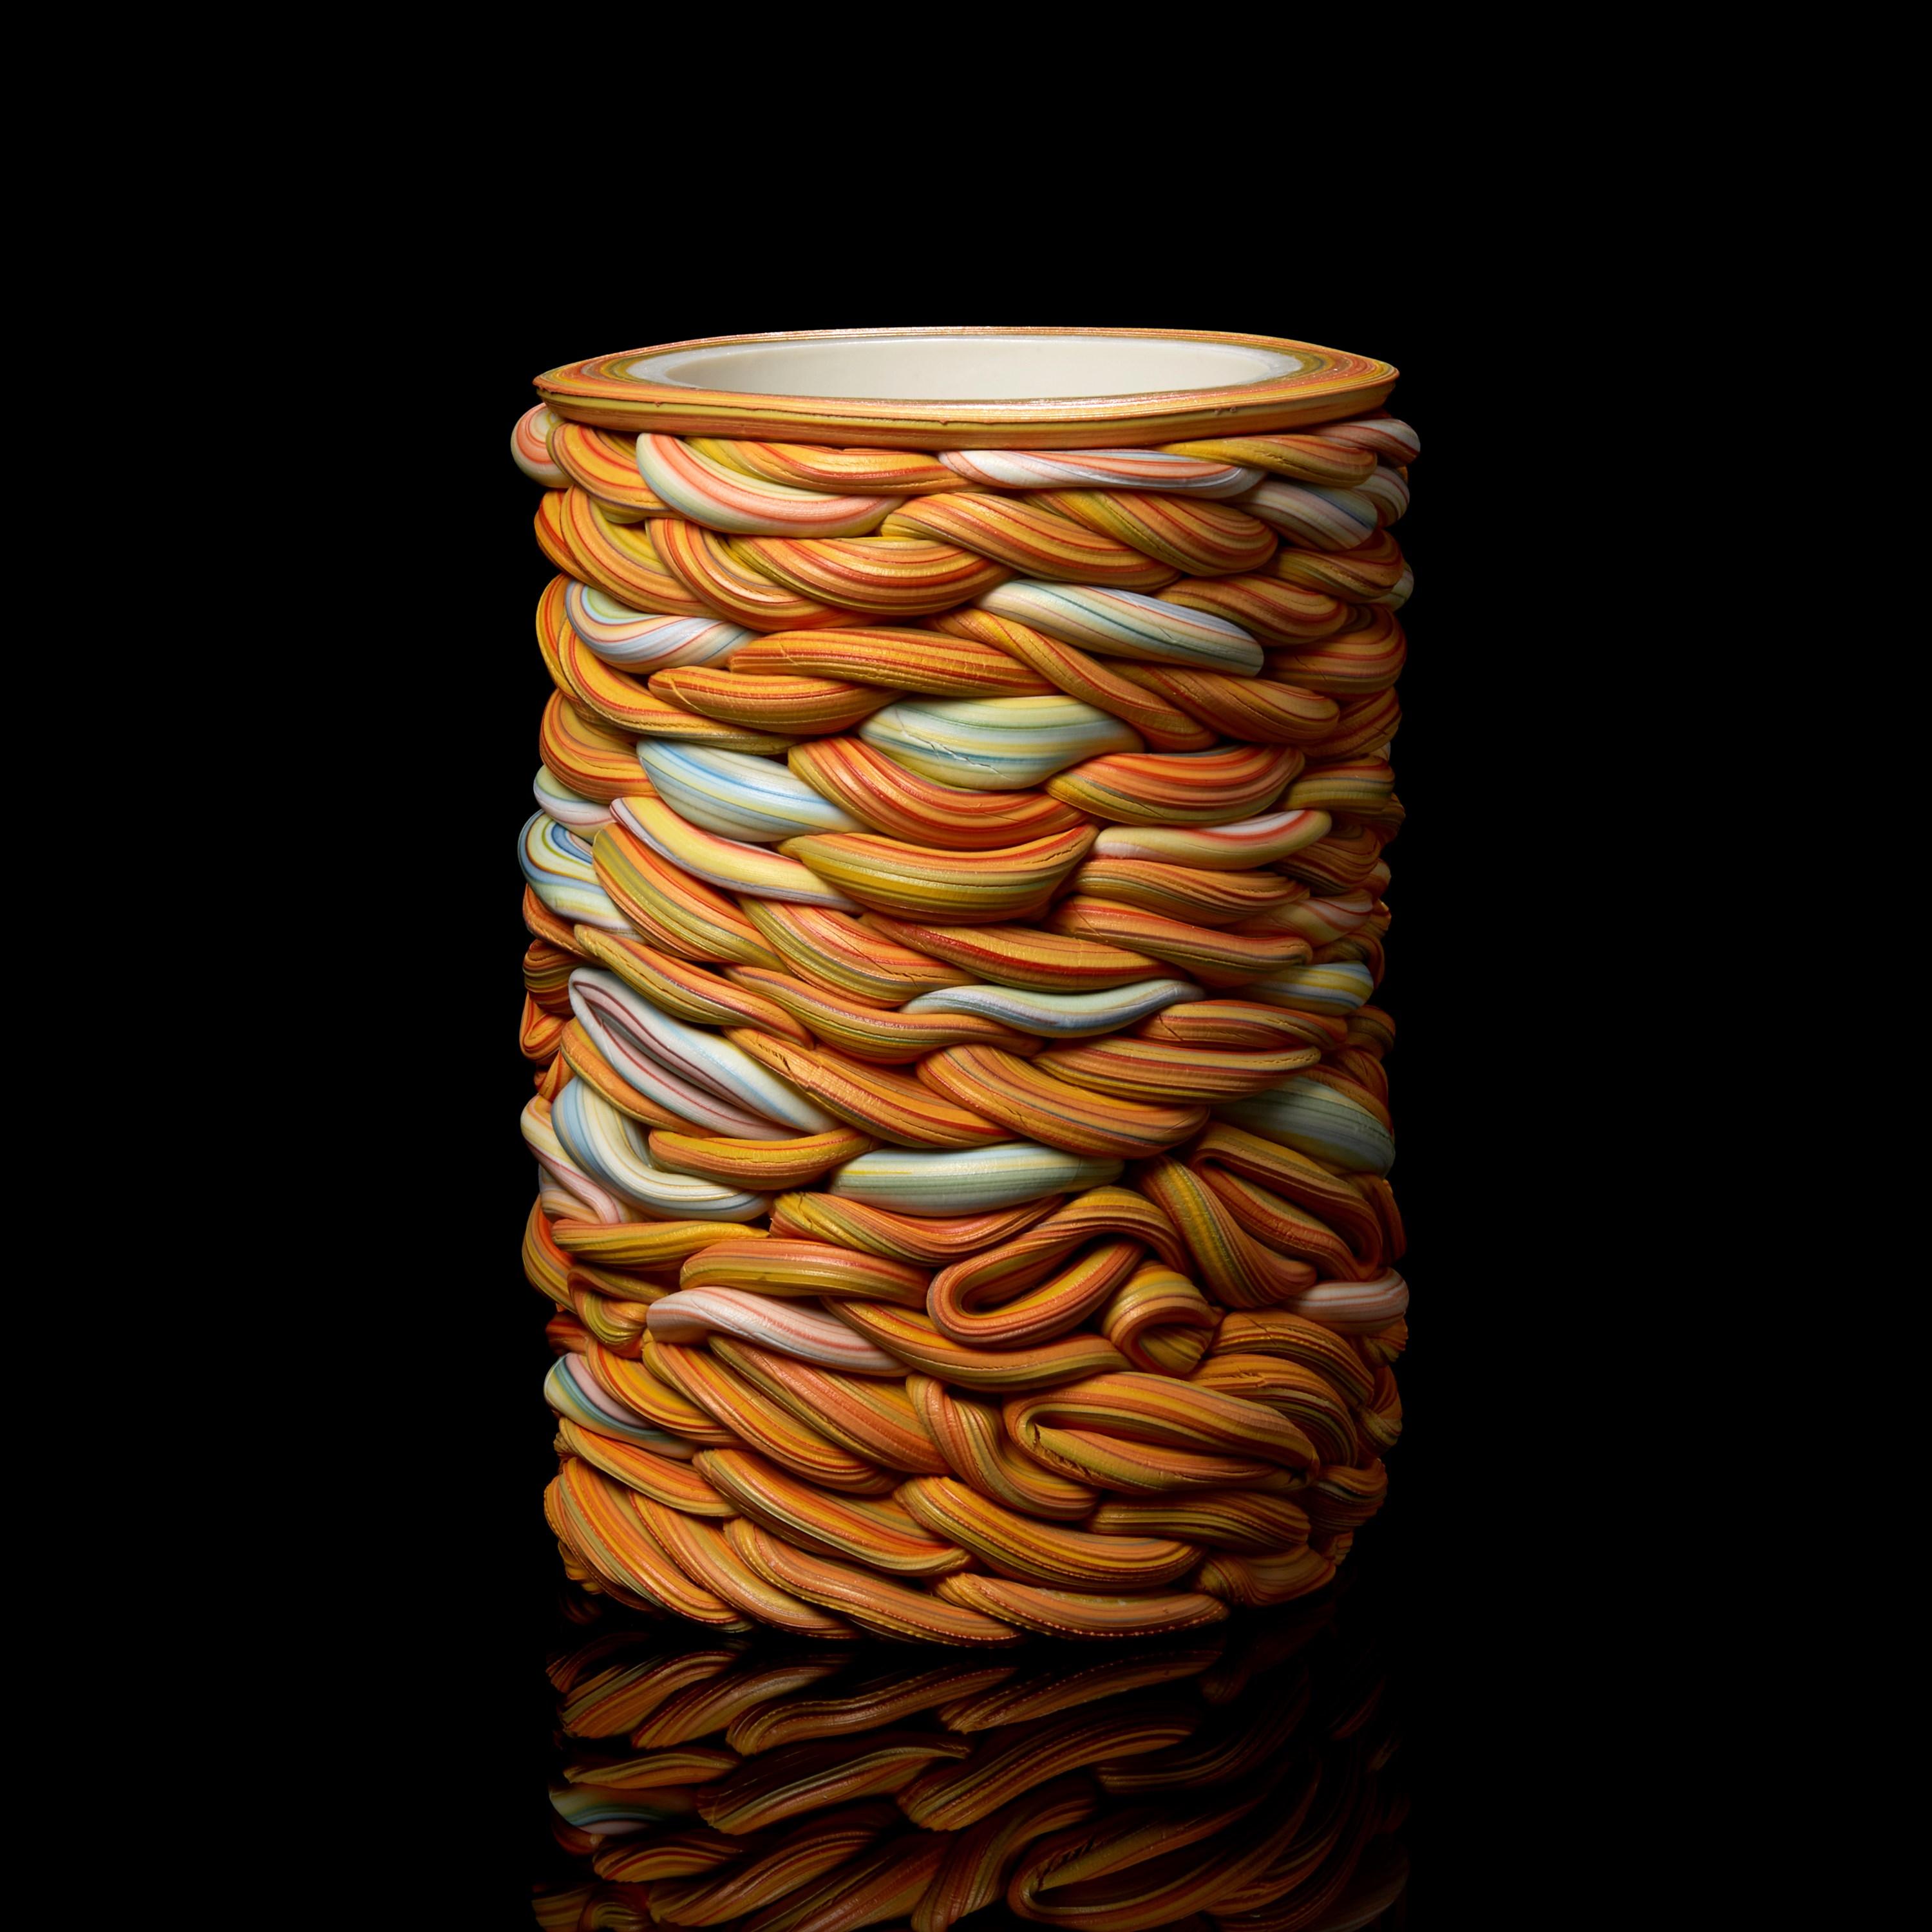 British Striped Fold I, A Mixed Colour Porcelain Sculptural Vessel by Steven Edwards